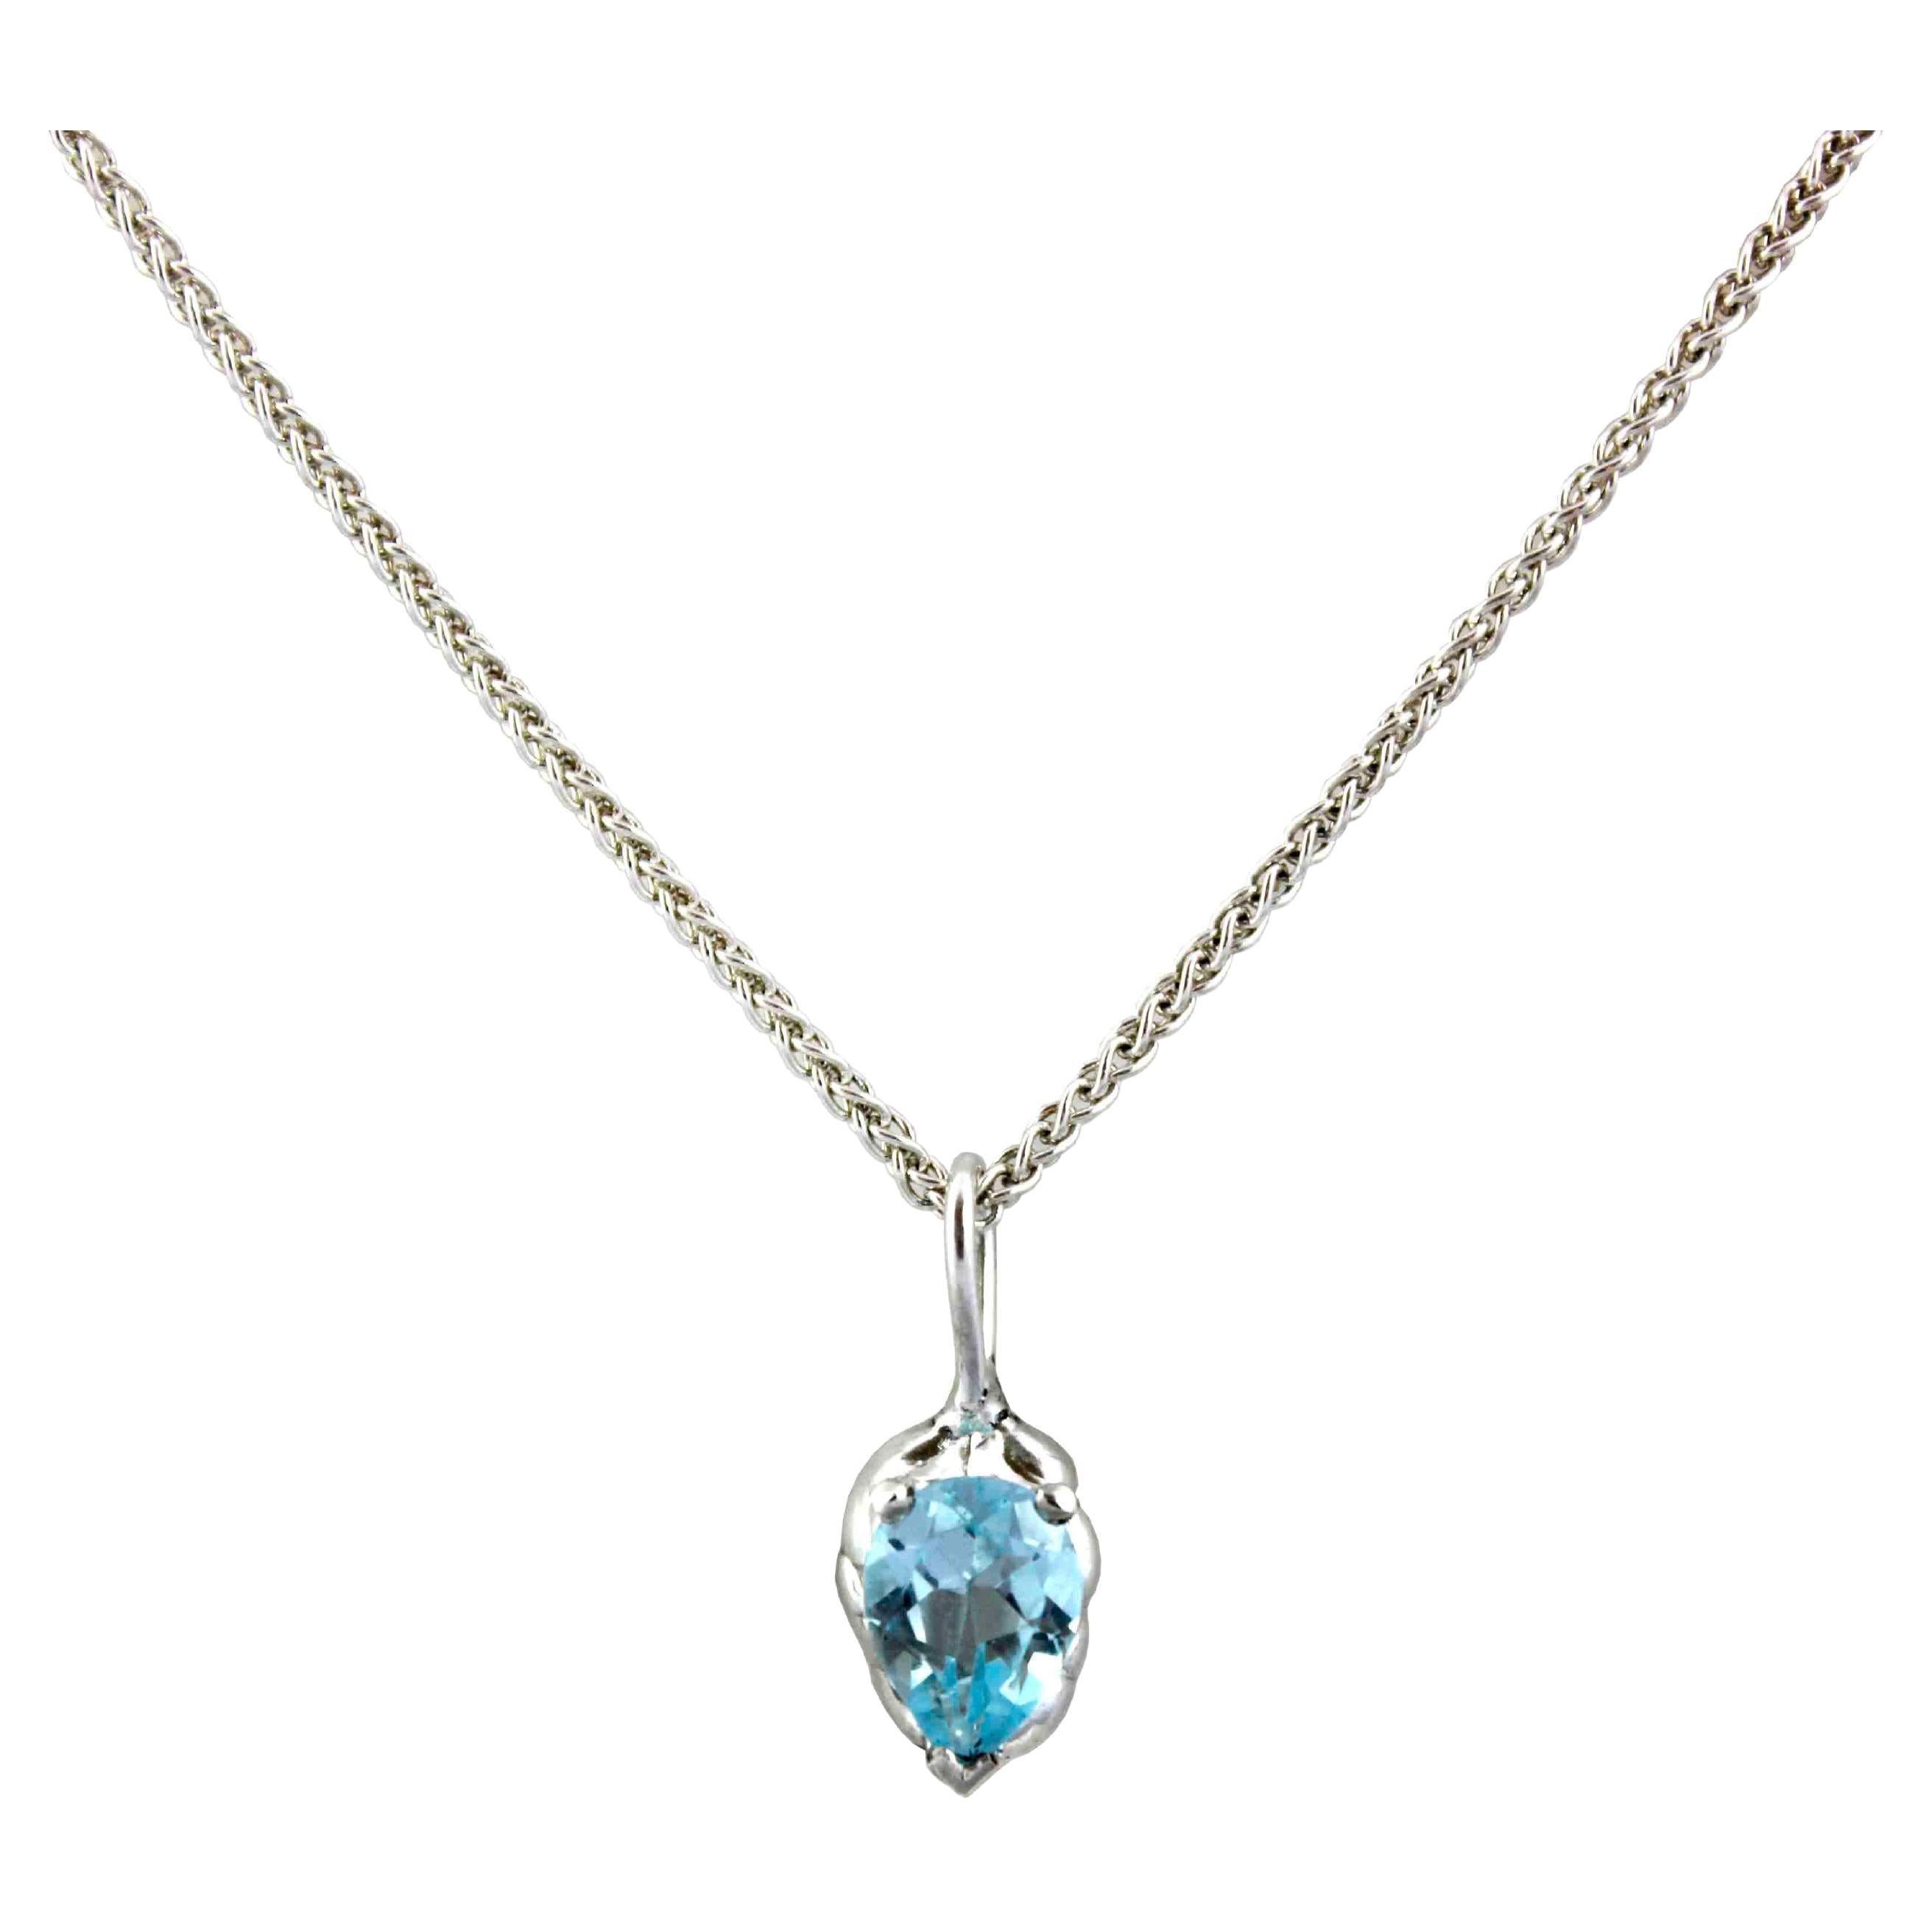  Delicate Blue Topaz Necklace